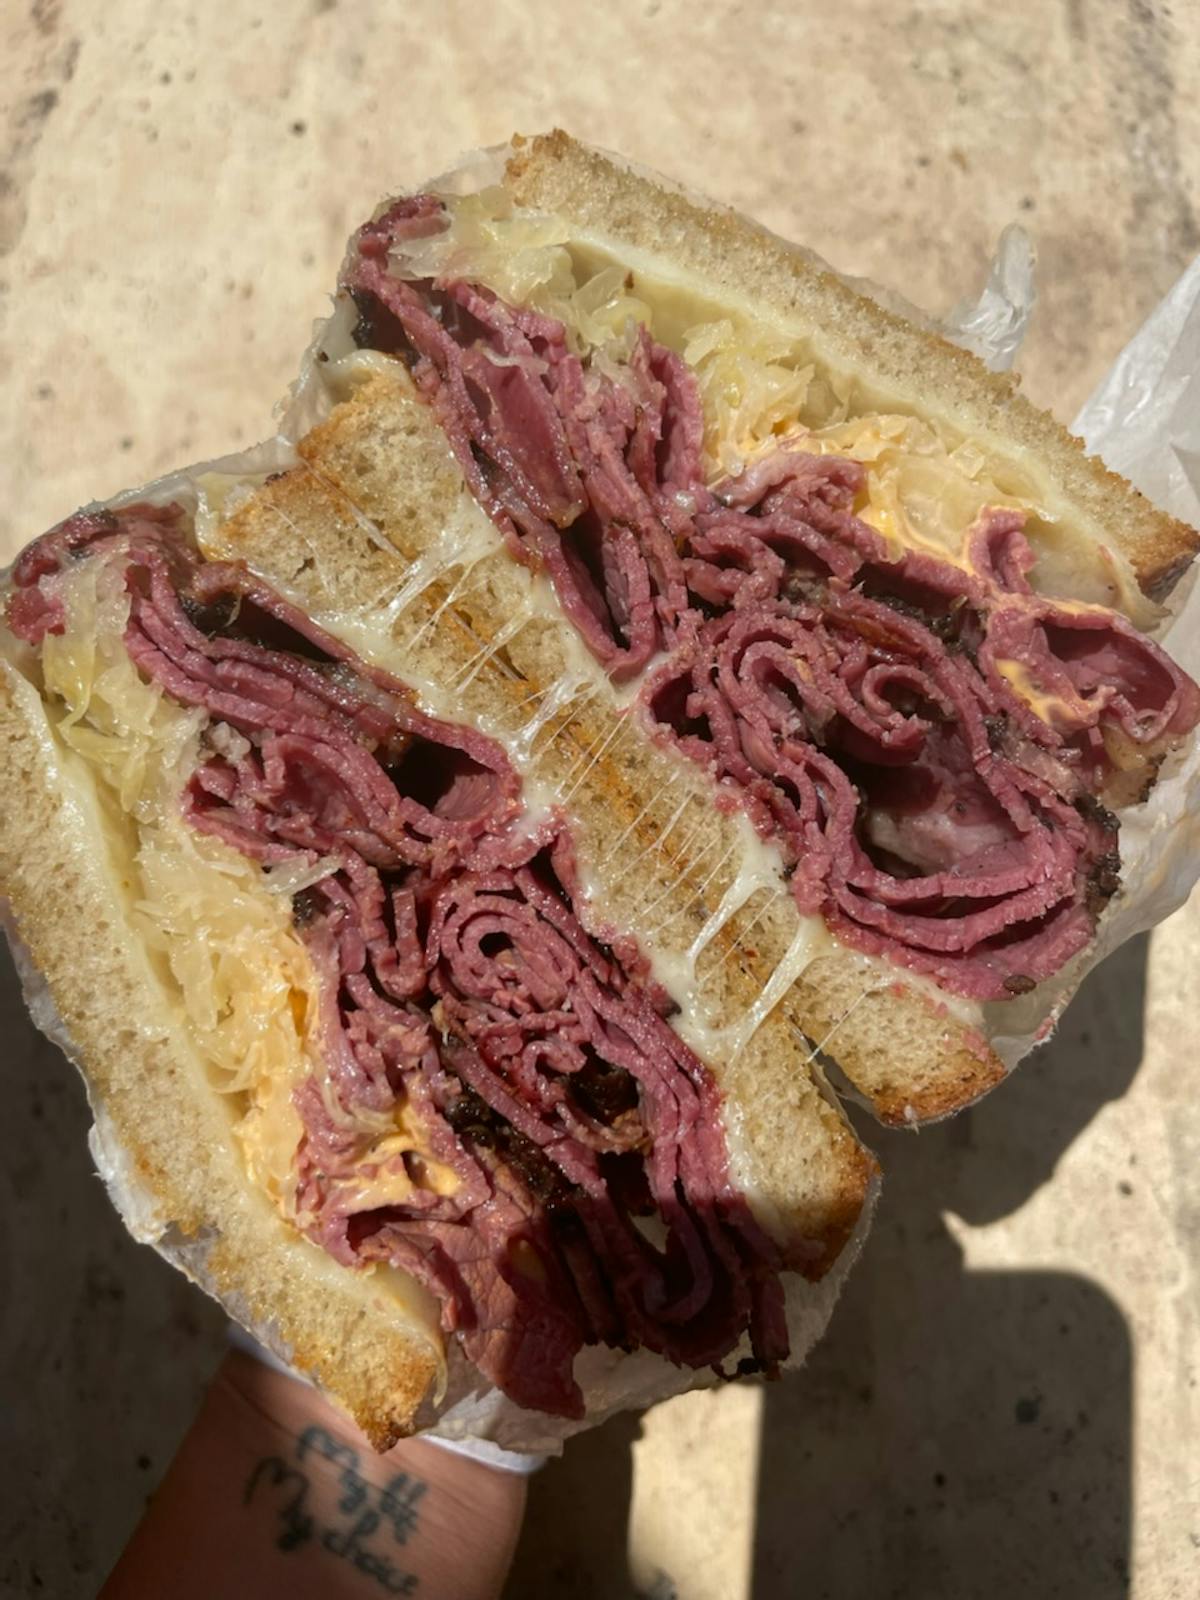 a sandwich cut in half